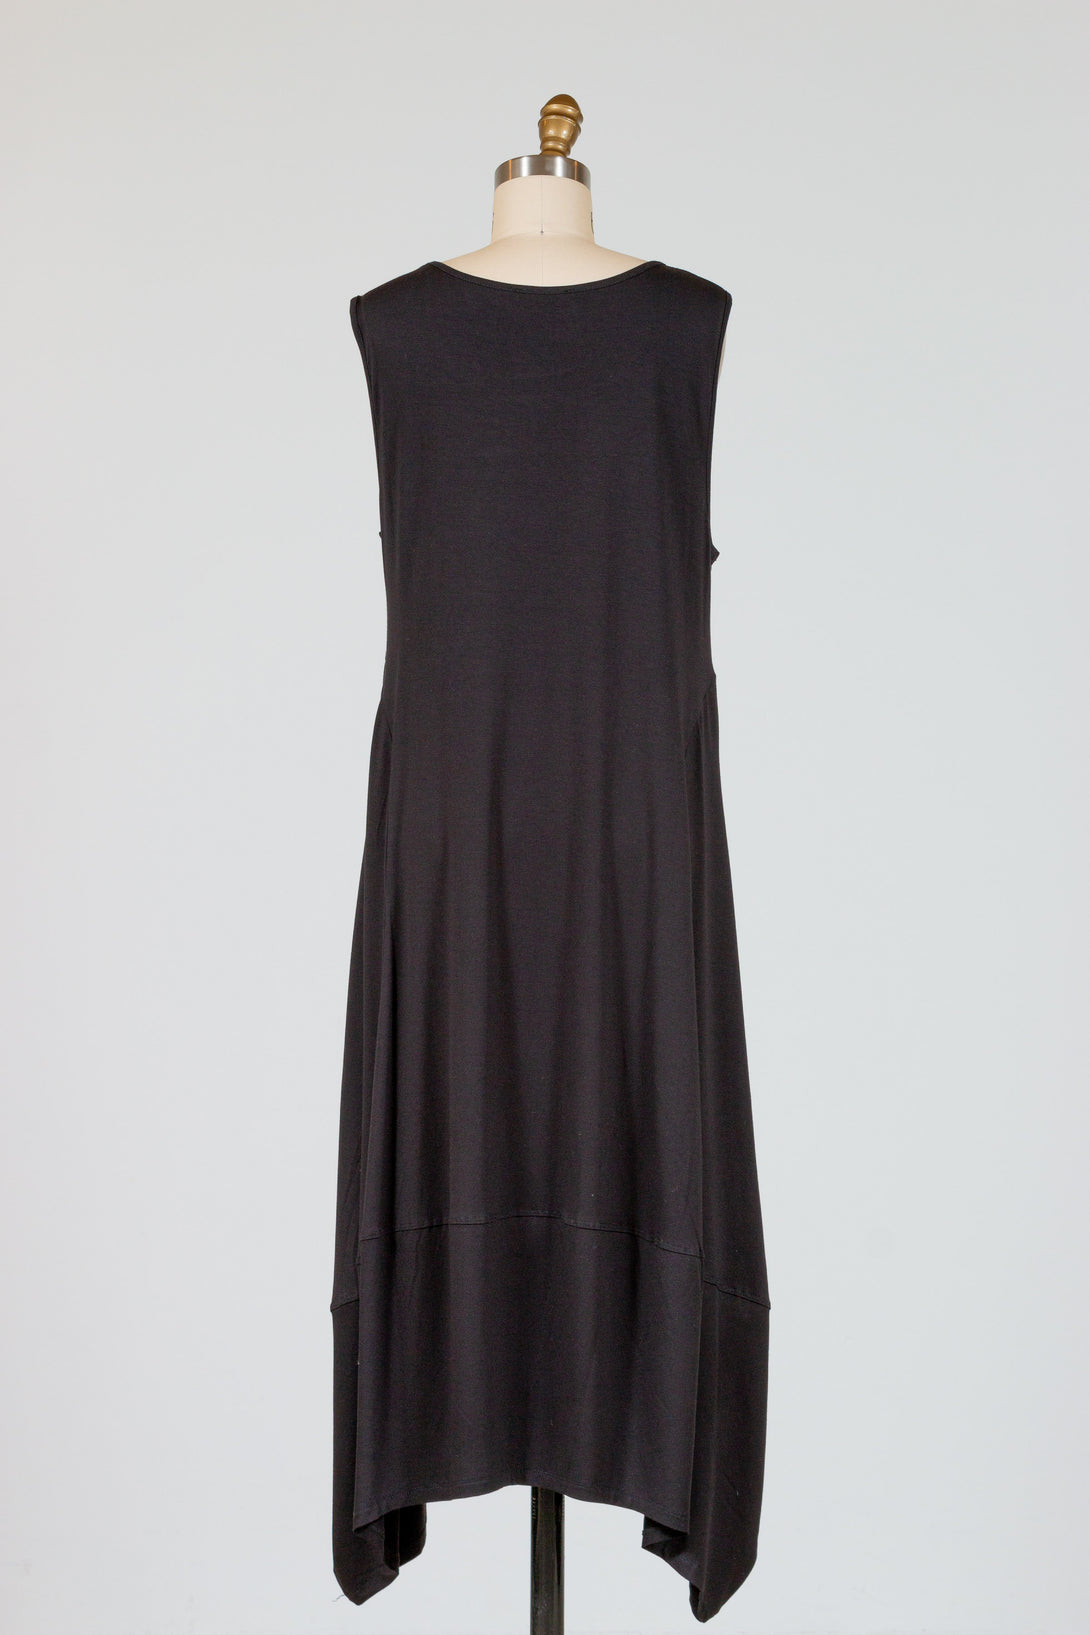 Kozan Dina Dress (Cotton Jersey) {Black}